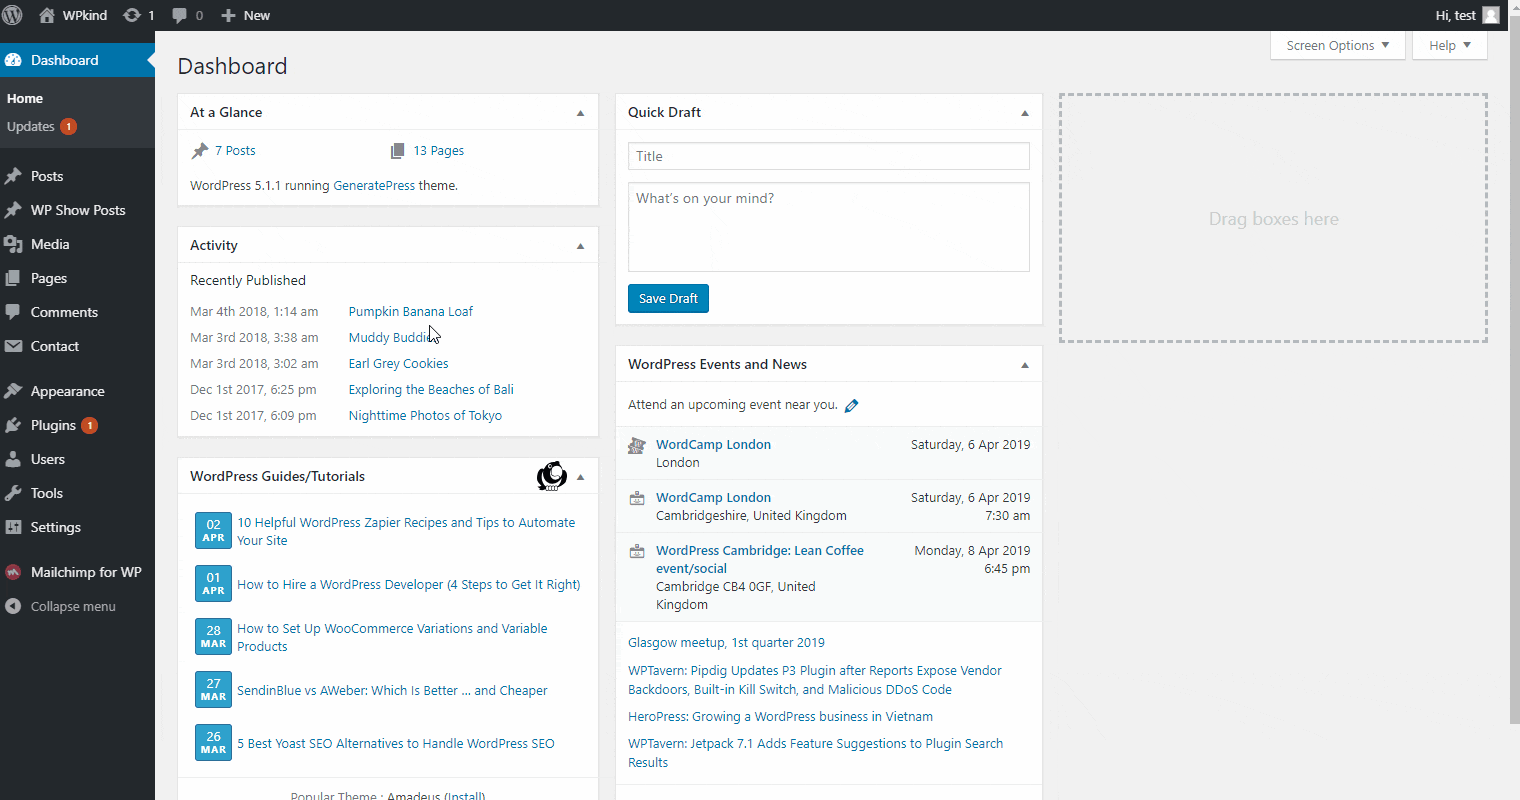 Adding items to the WordPress menu